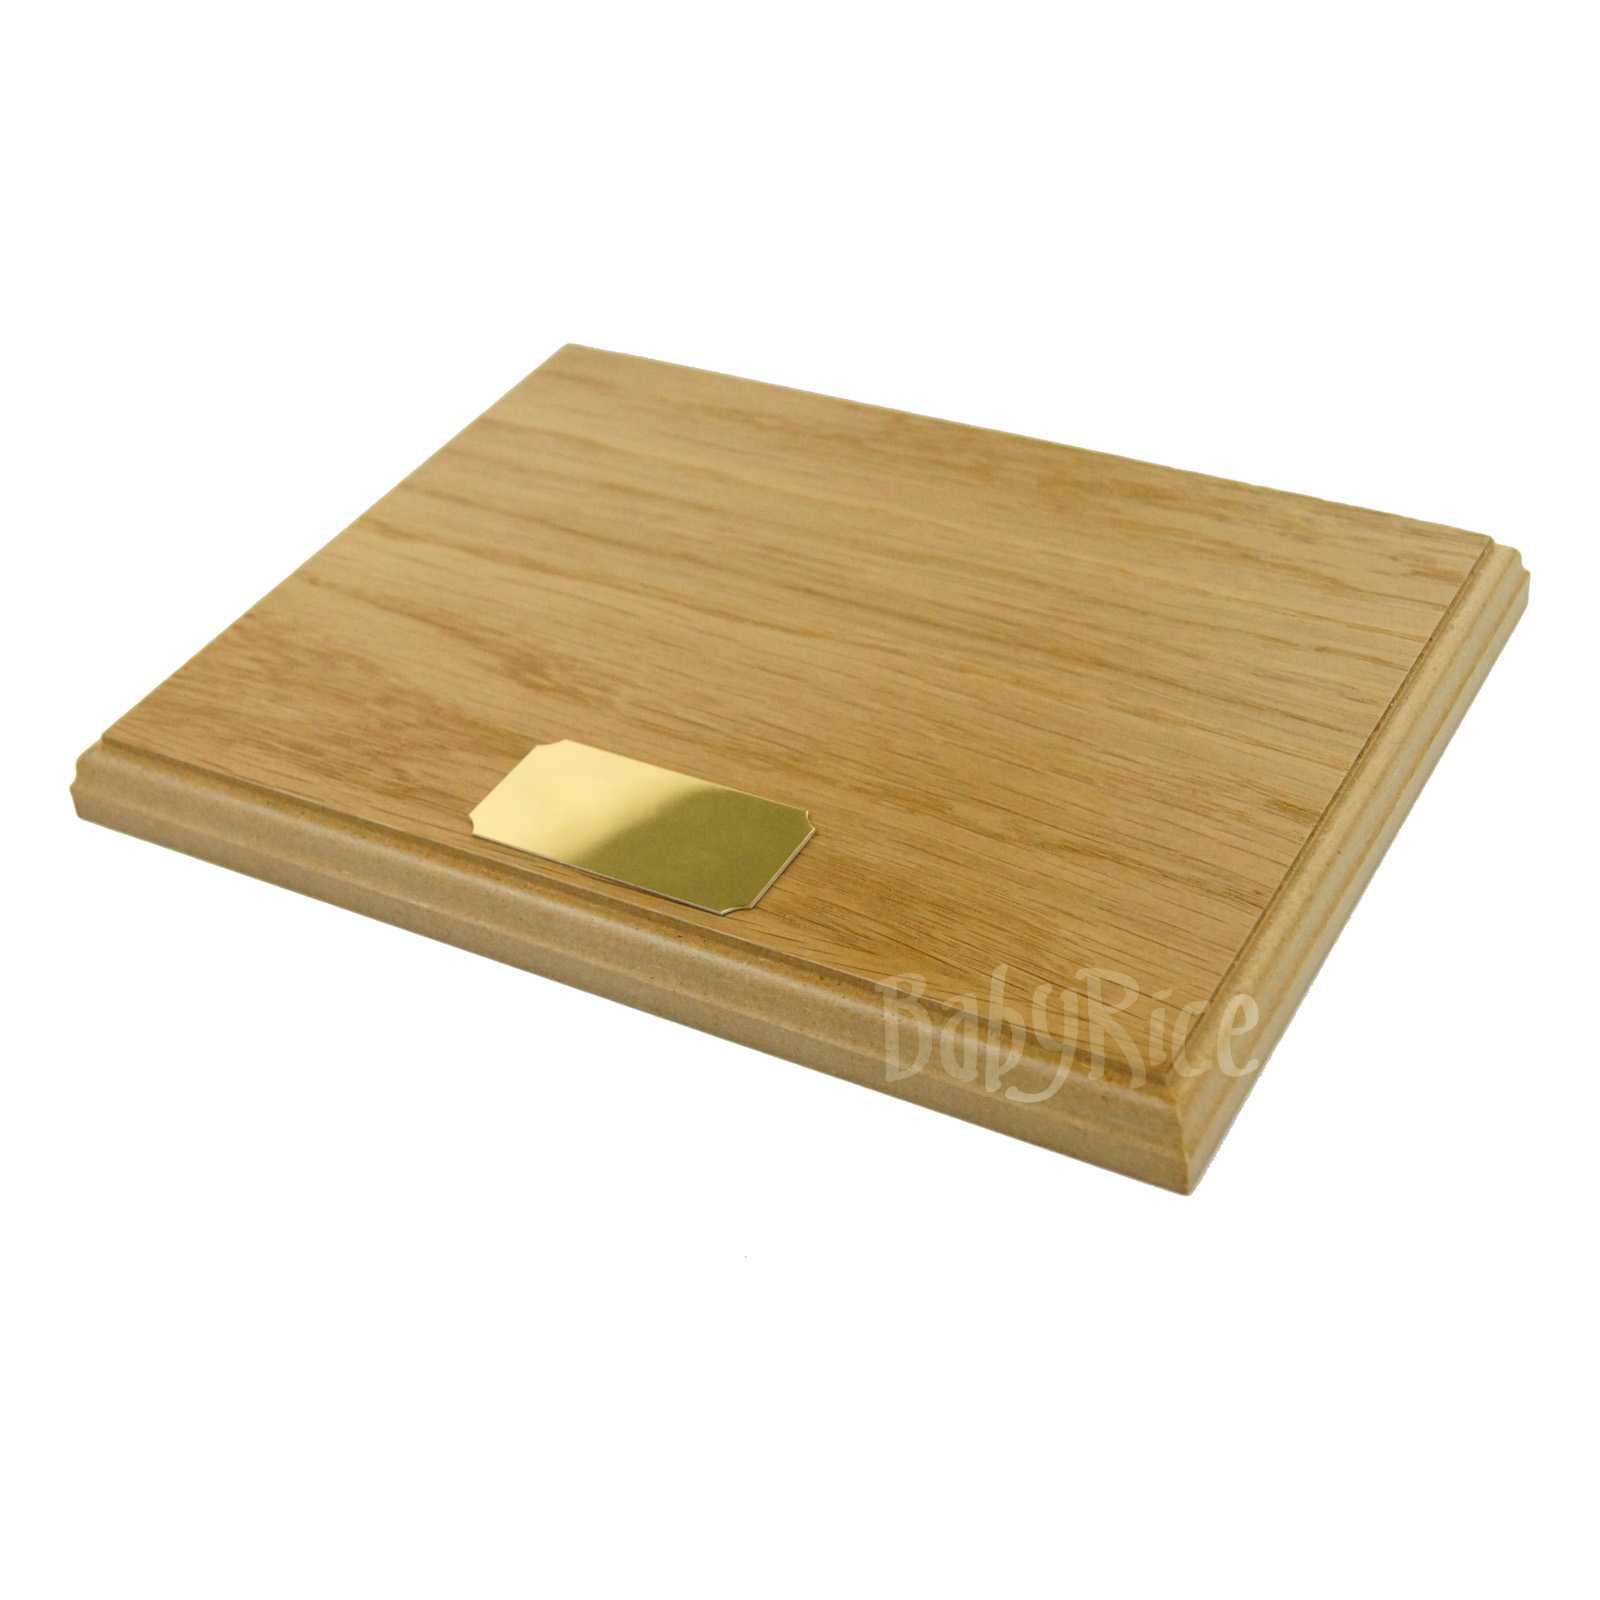 Oak Wooden Display Plinth 8x6" Blank Gold Plaque